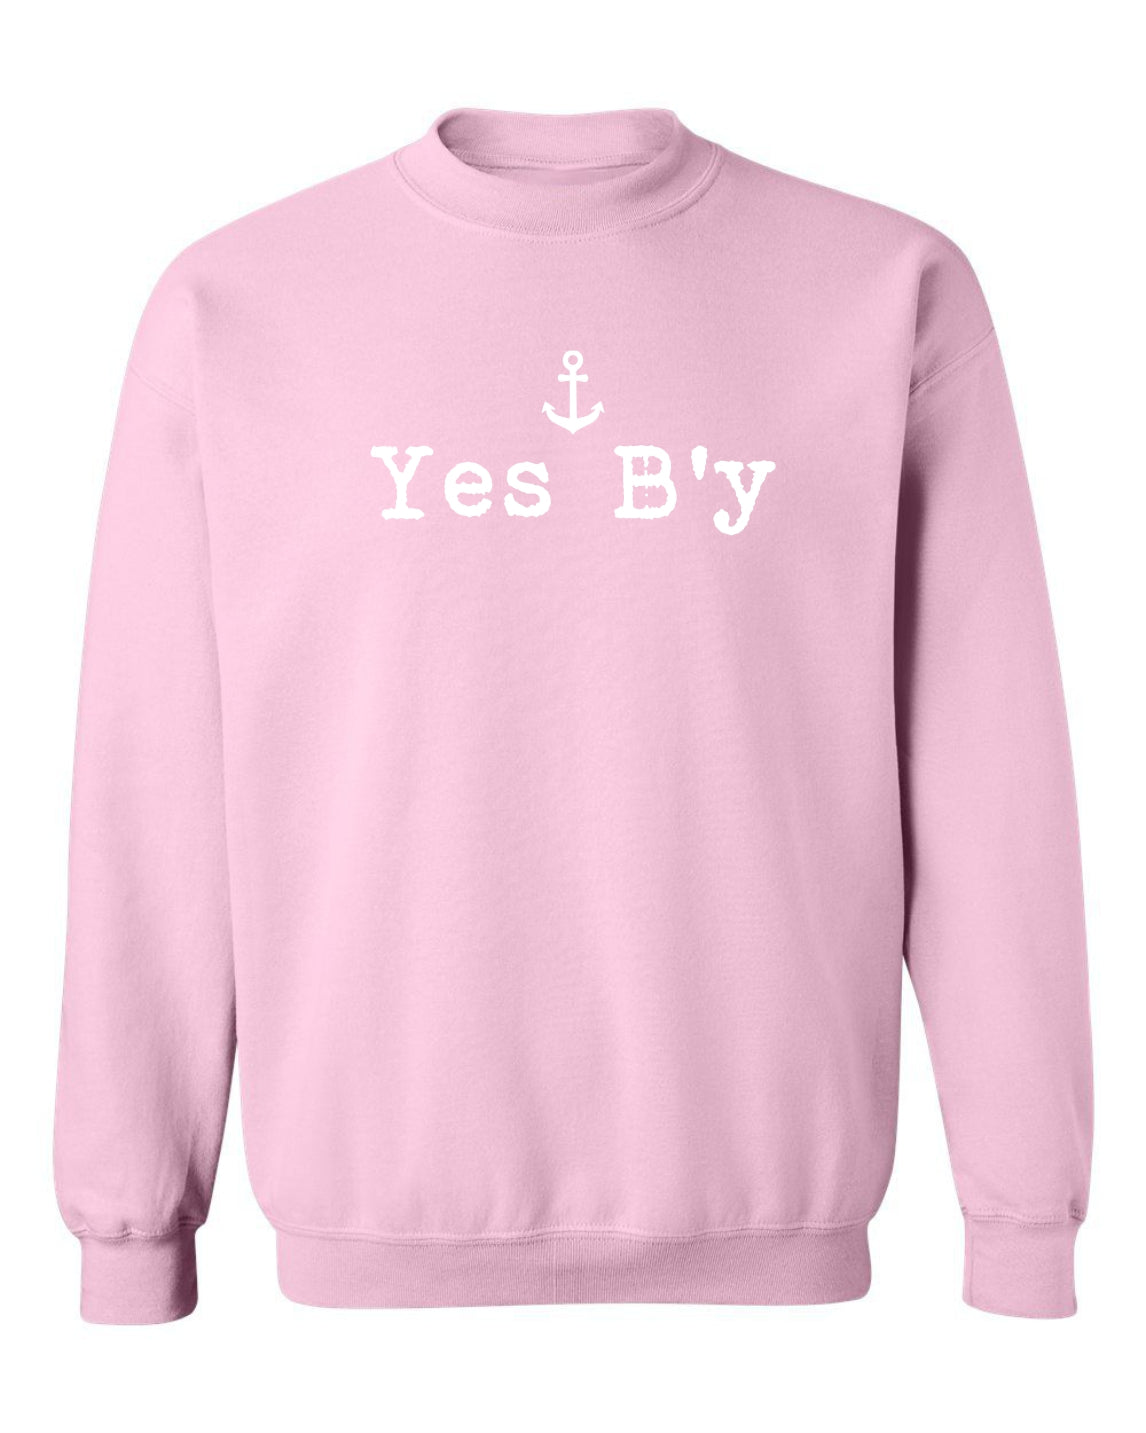 "Yes B'y" Unisex Crewneck Sweatshirt